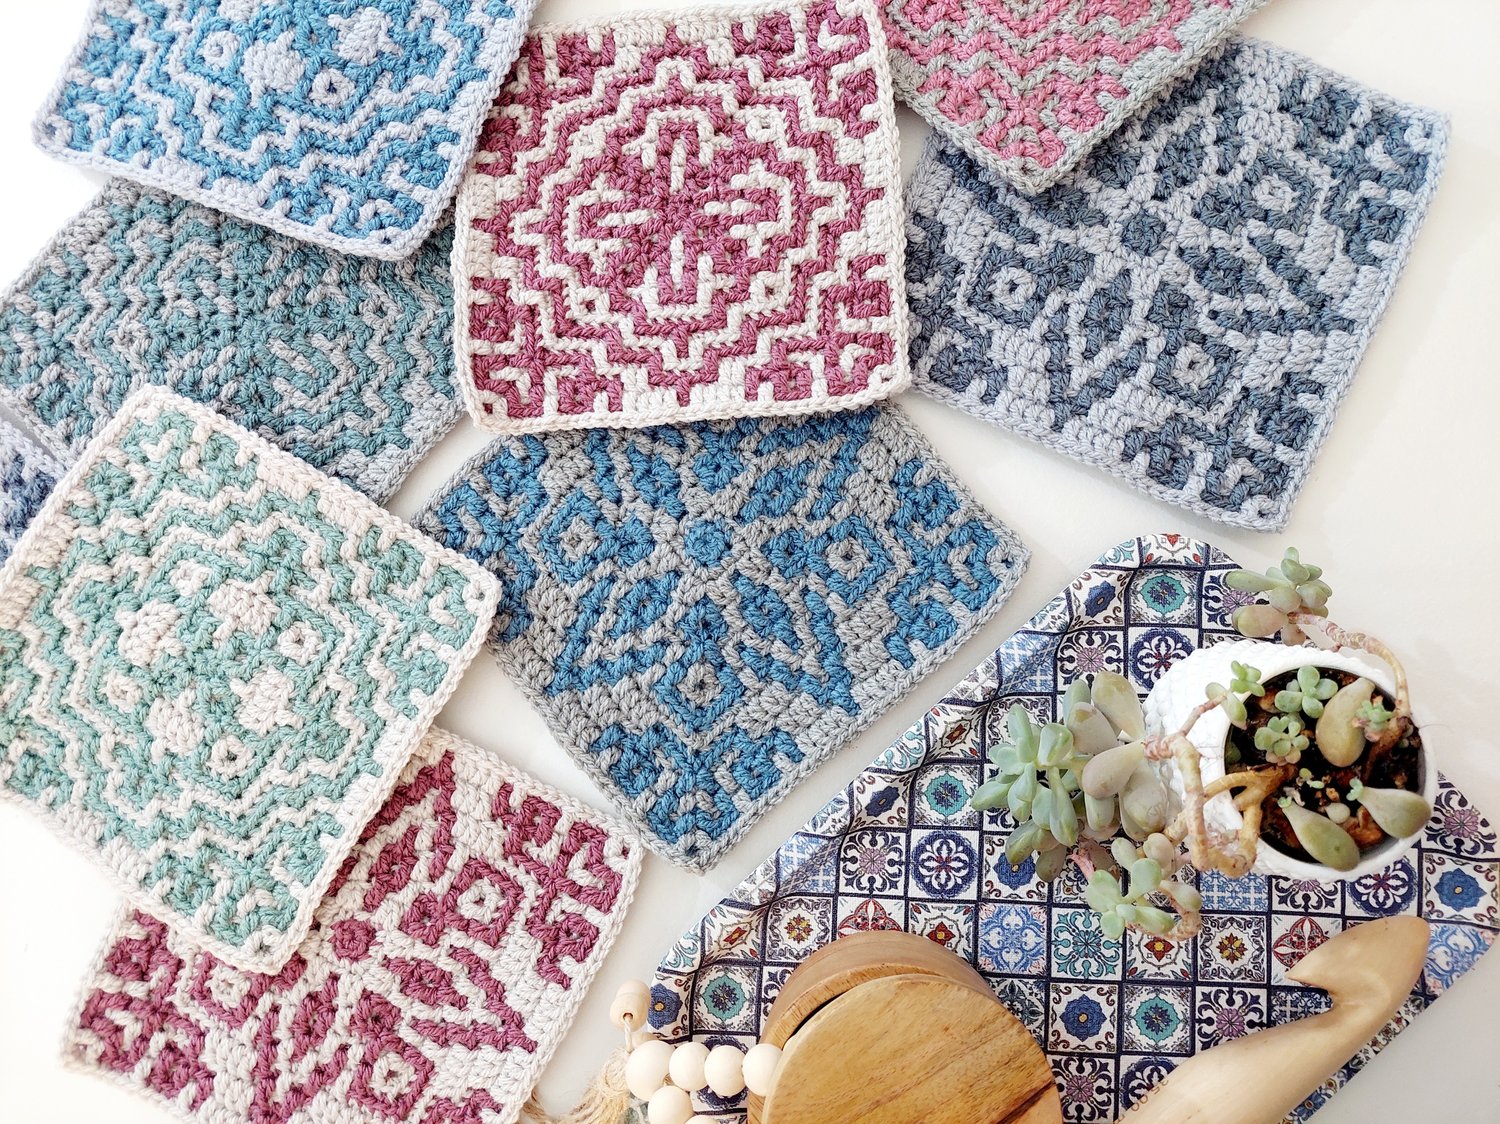 Summer Mosaic Jewels. Three overlay mosaic crochet in rounds motif patterns